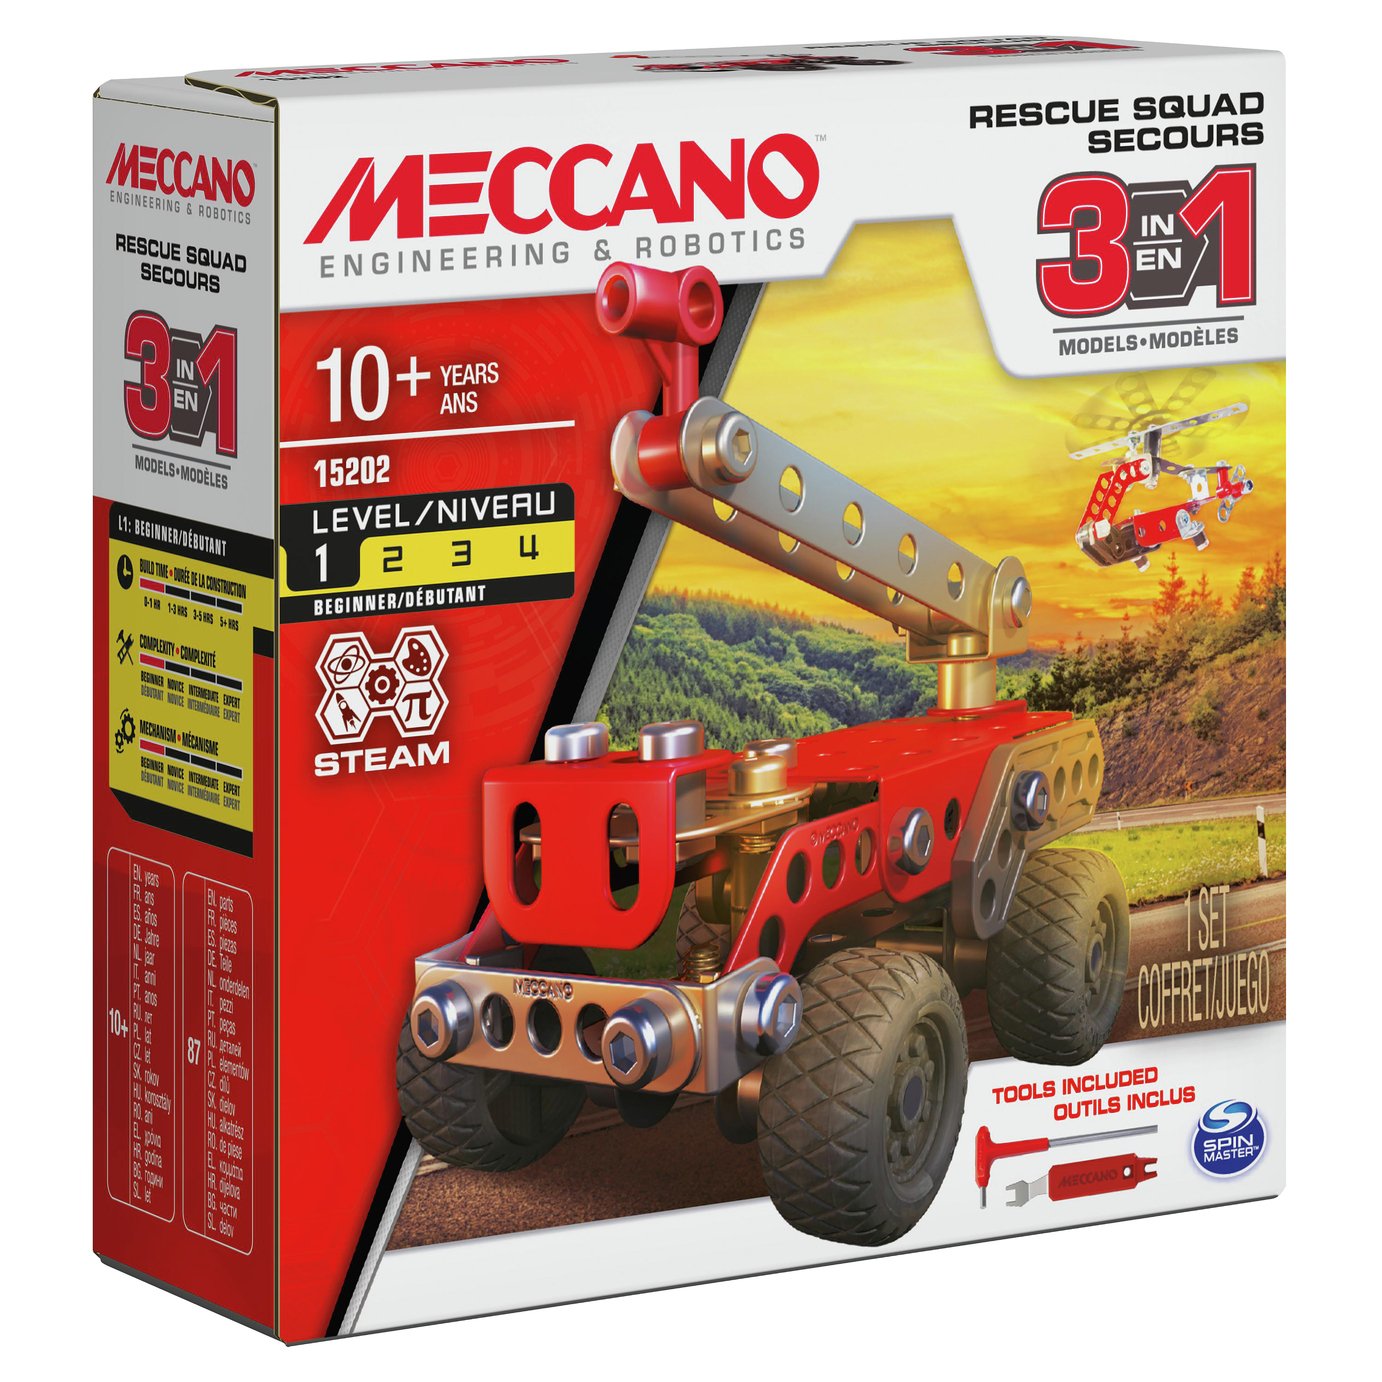 Meccano 3 Model Set Review